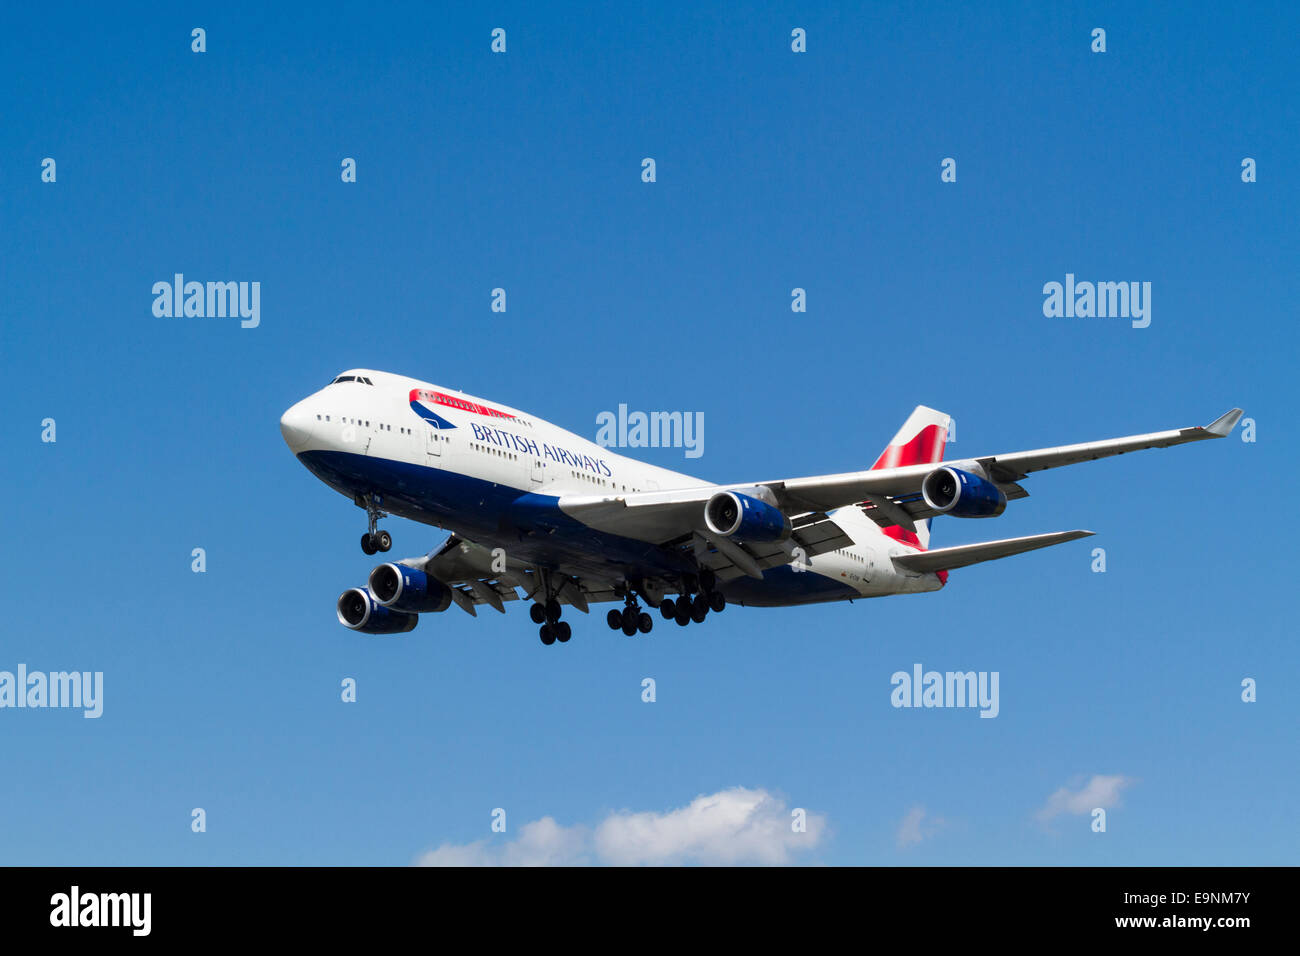 British Airways Jumbo Jet:  BA Boeing 747-400 plane, G-CIVN, on its approach for landing at London Heathrow, England, UK Stock Photo